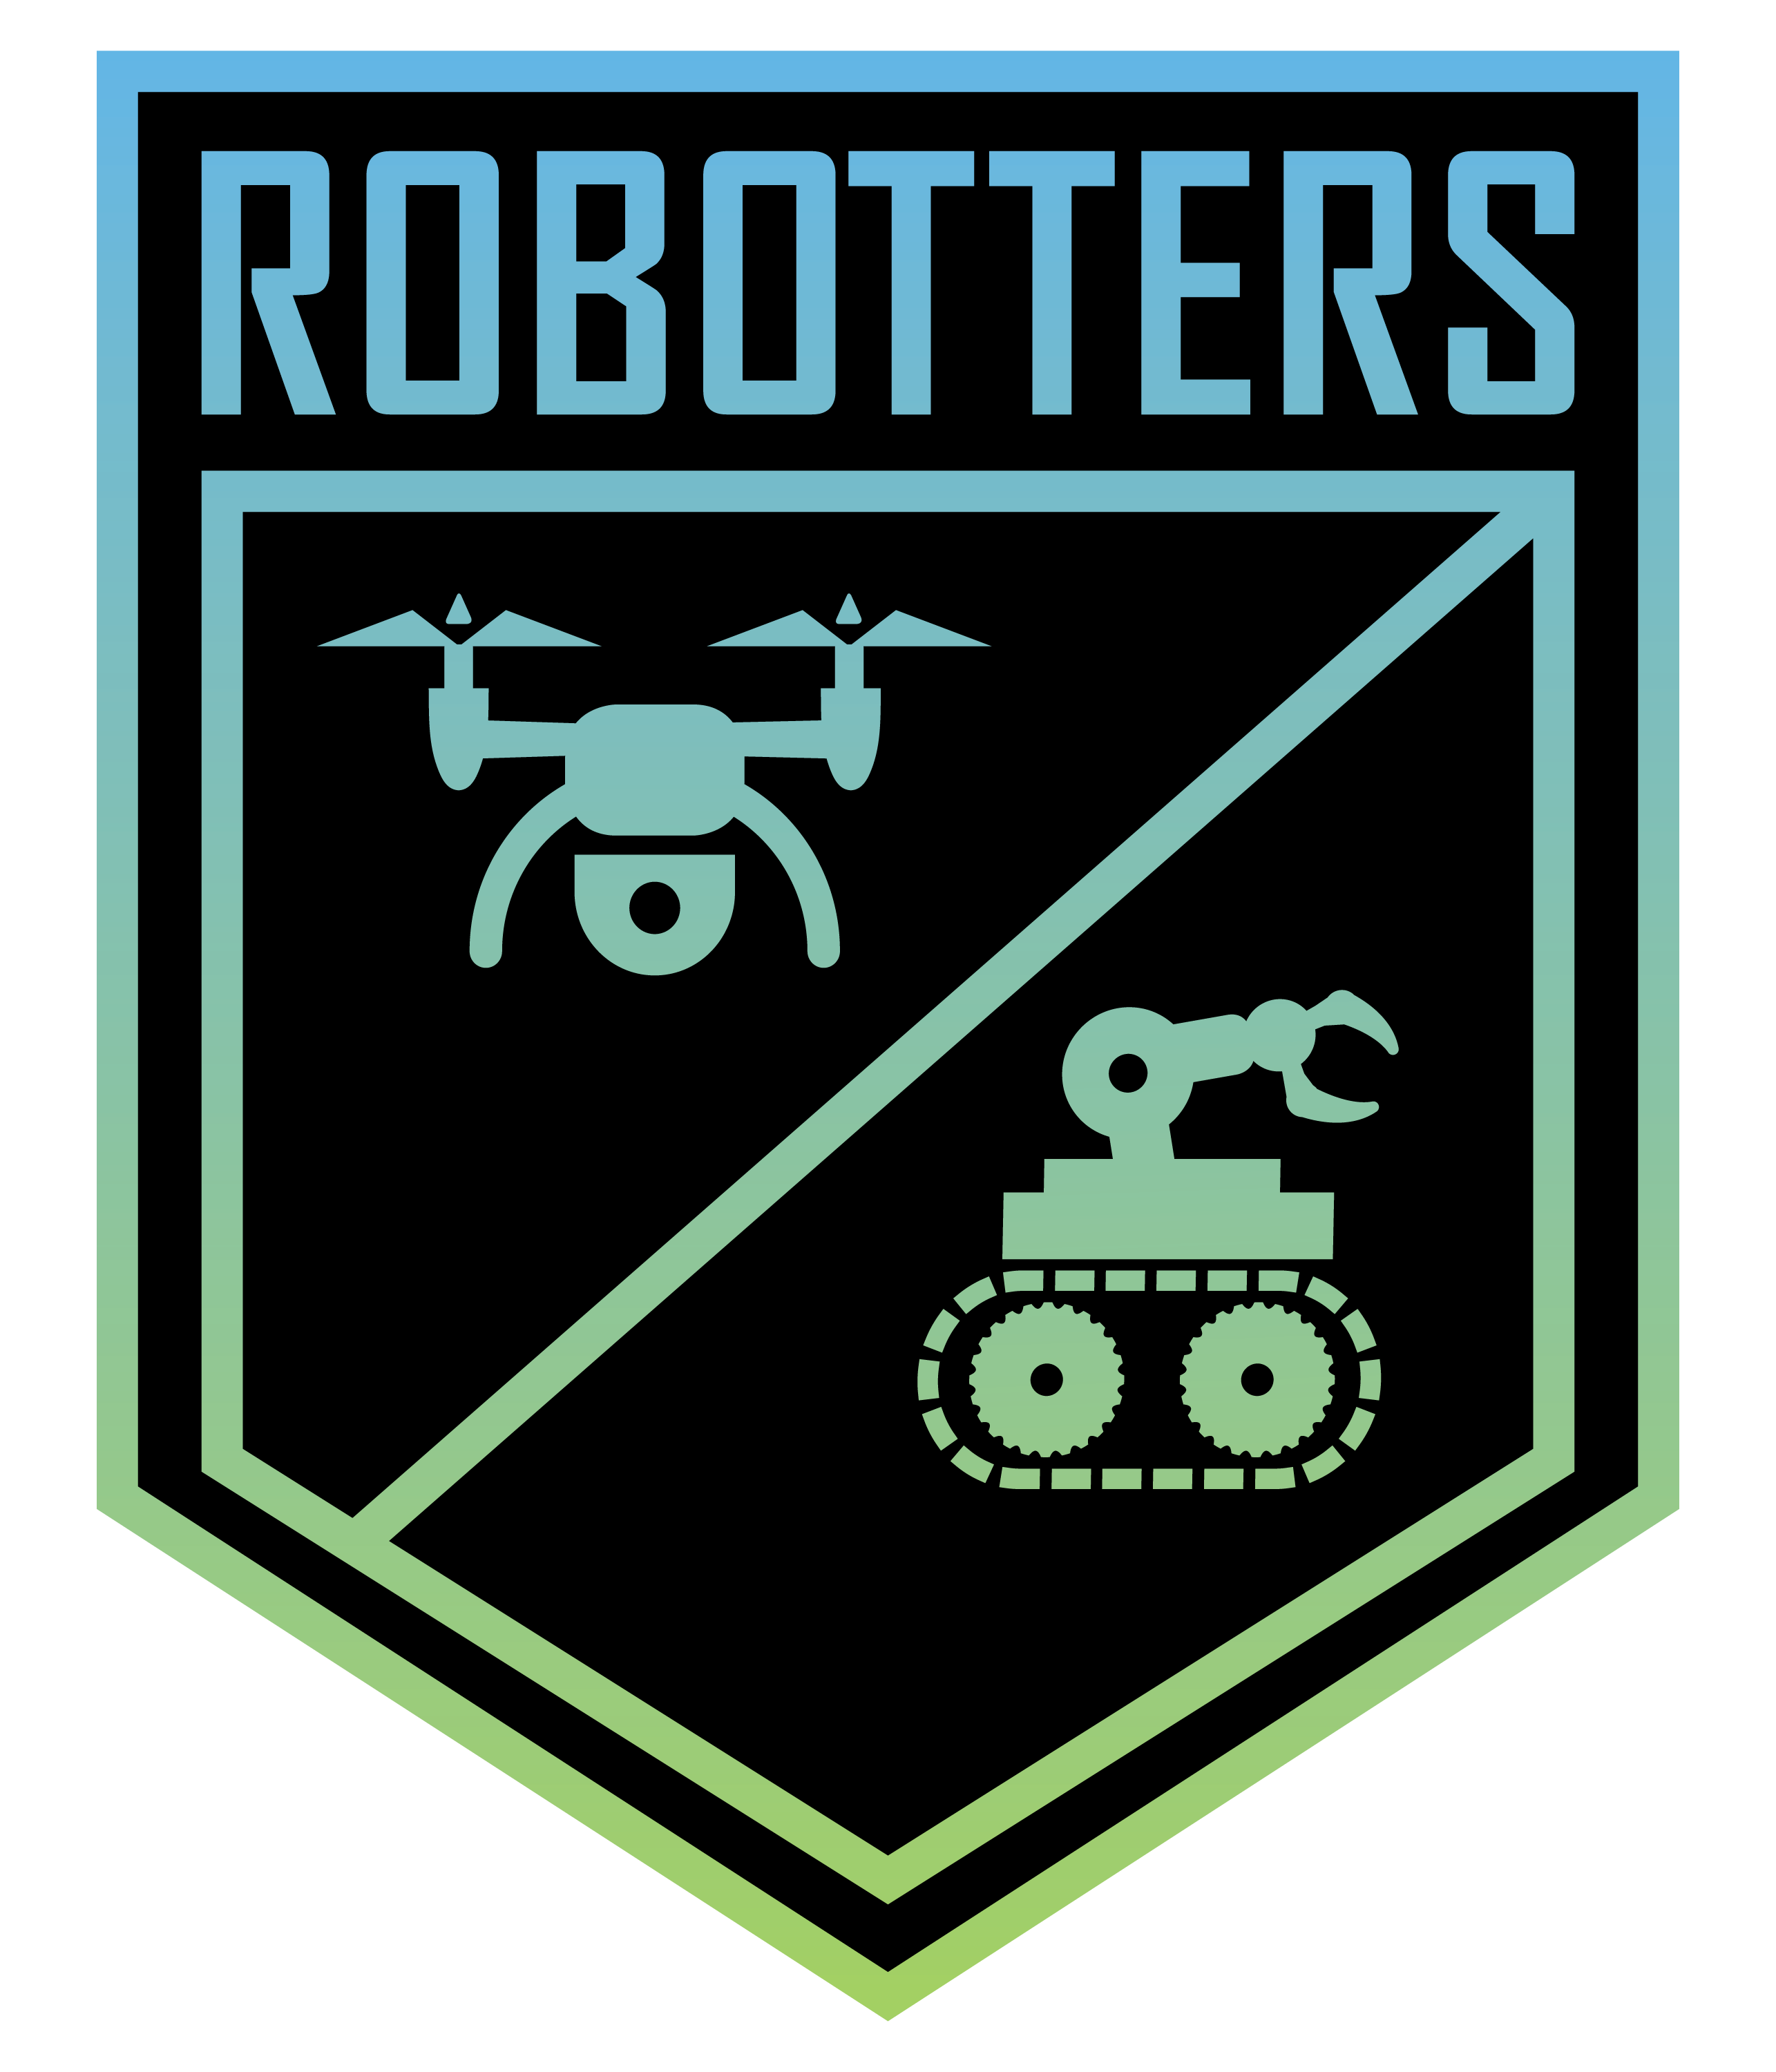 Robotters